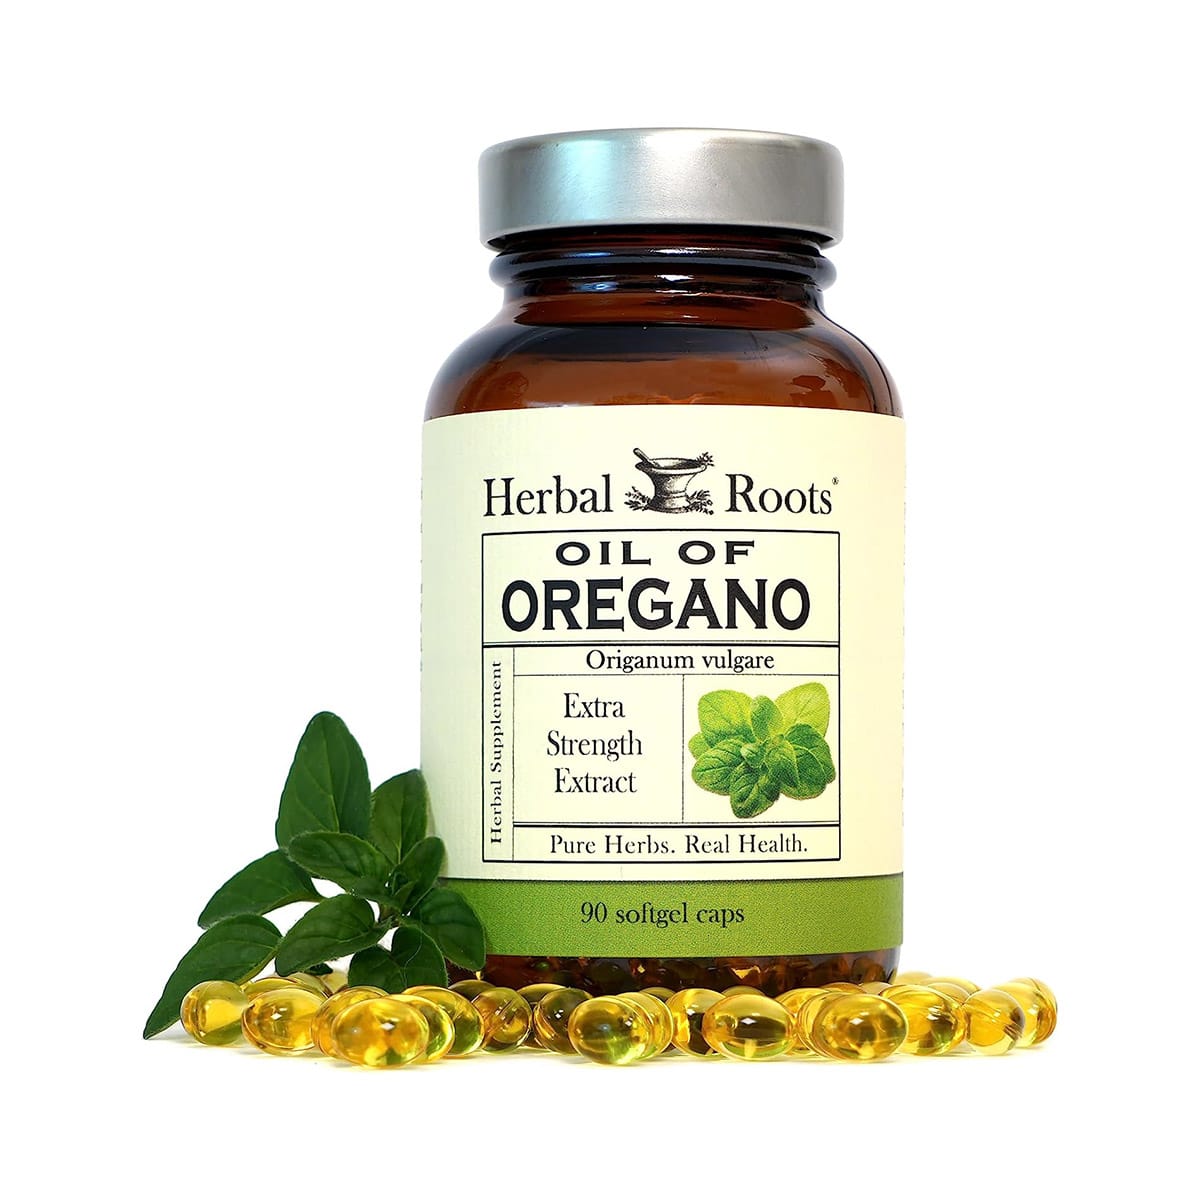 Oil of Oregano for cold and flu symptoms